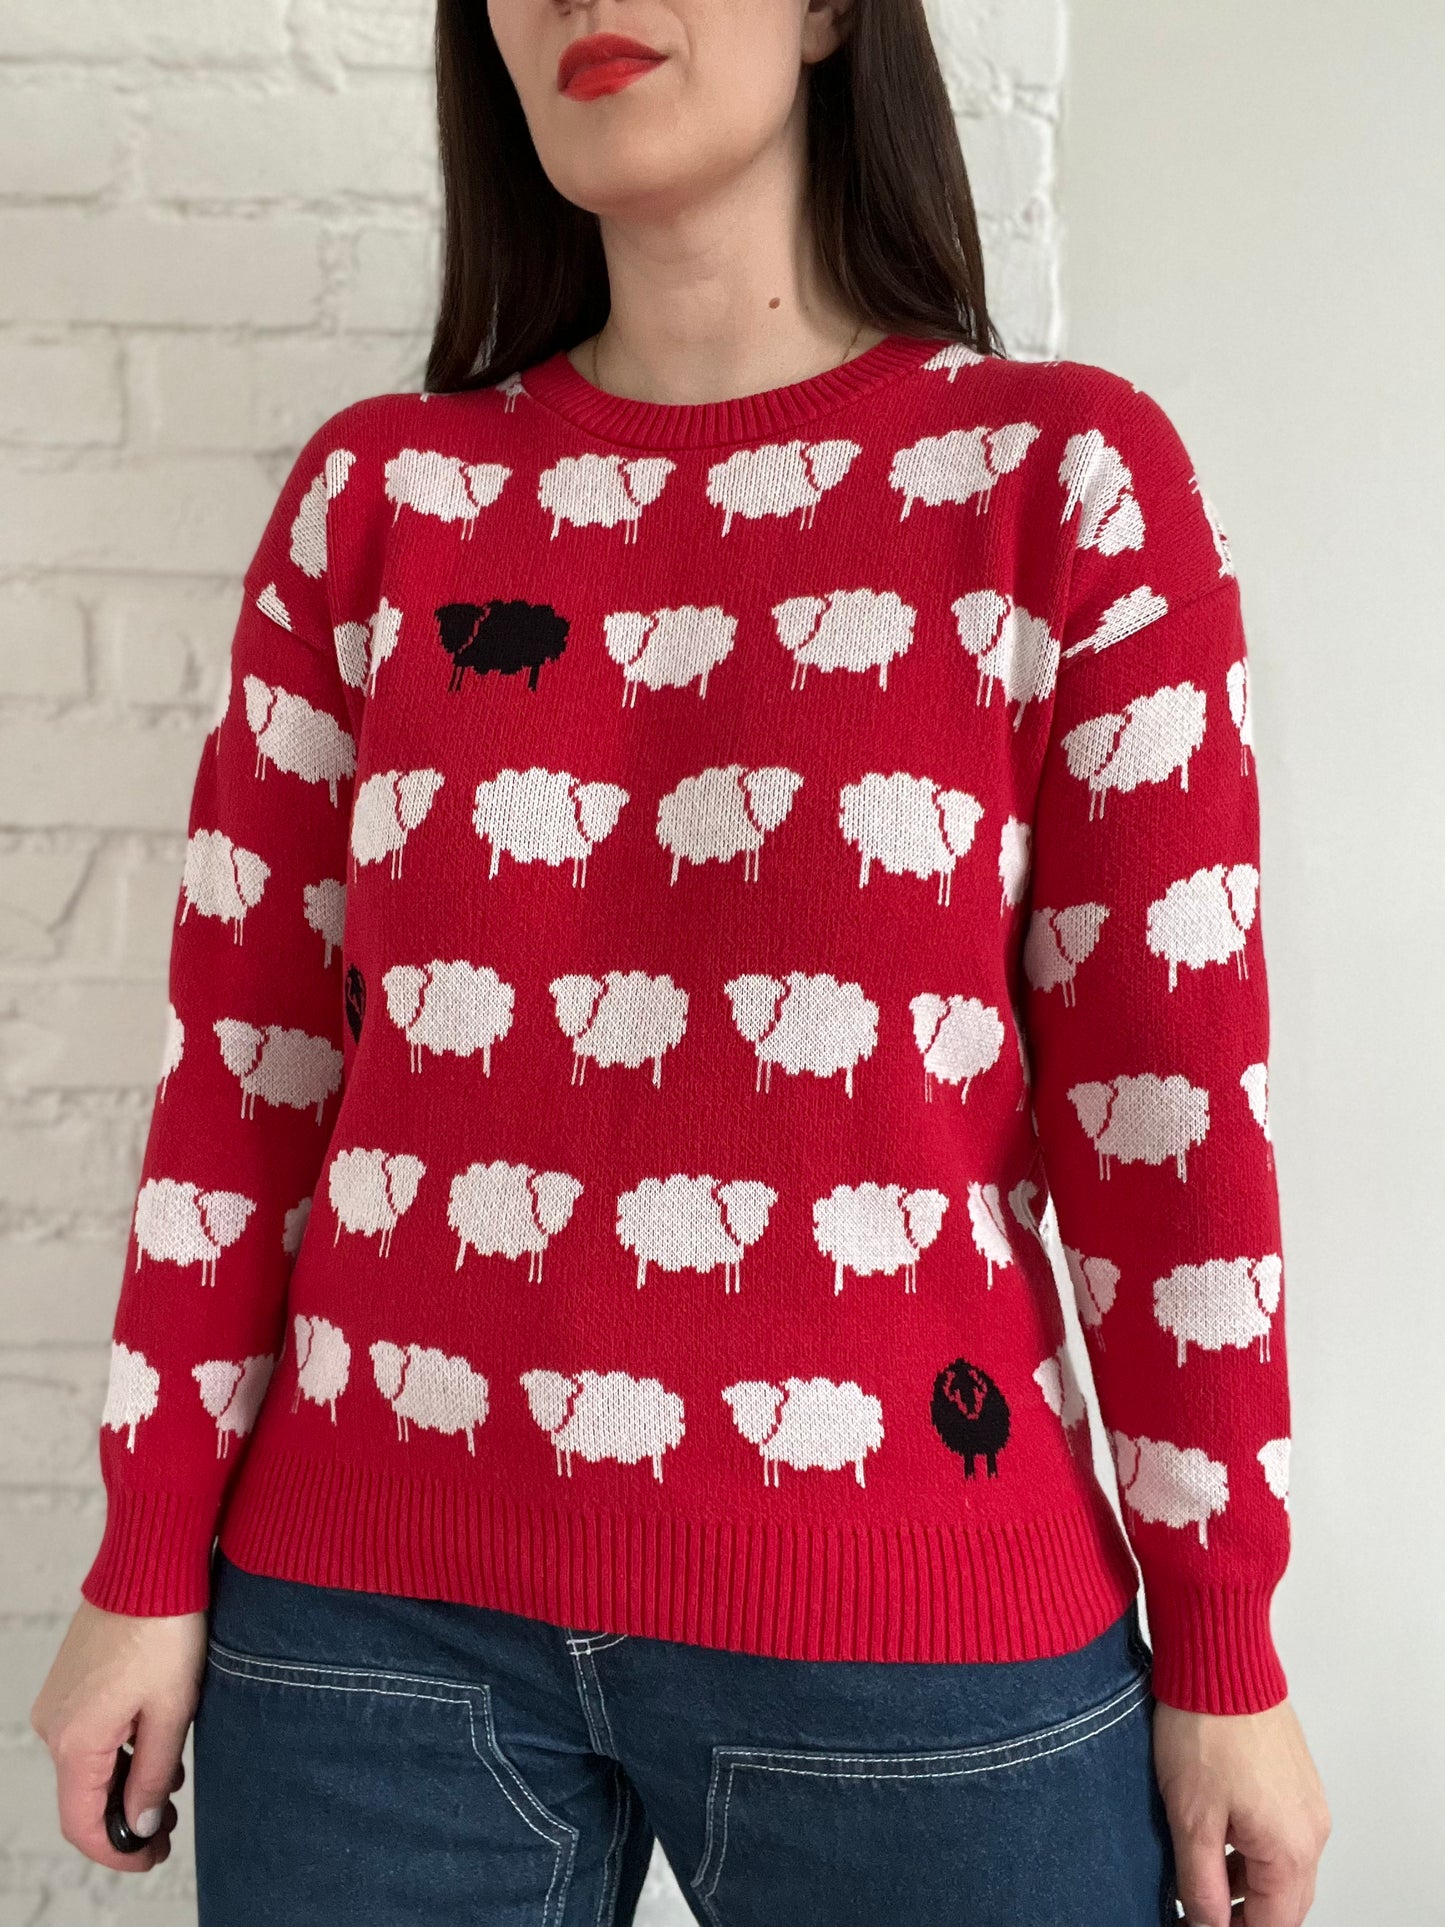 Princess "D" Sheep Inspired Sweater - M